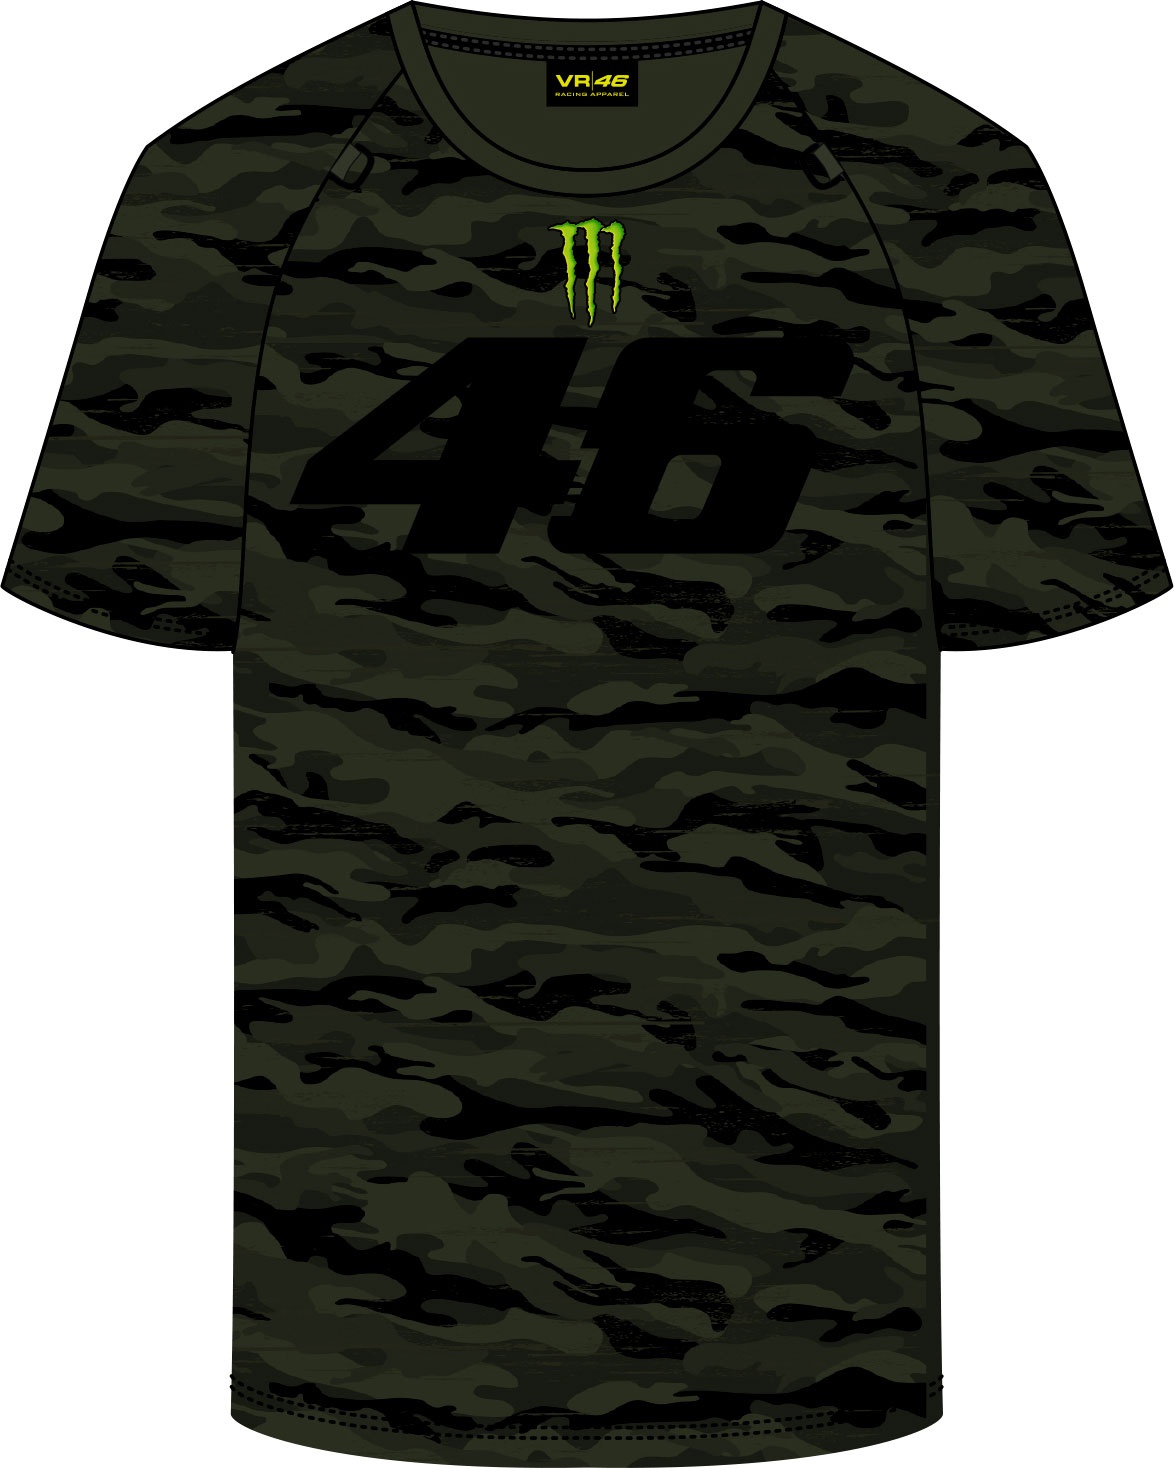 VR46 Racing Apparel Monster Dual Camp, t-shirt - Vert Foncé - S